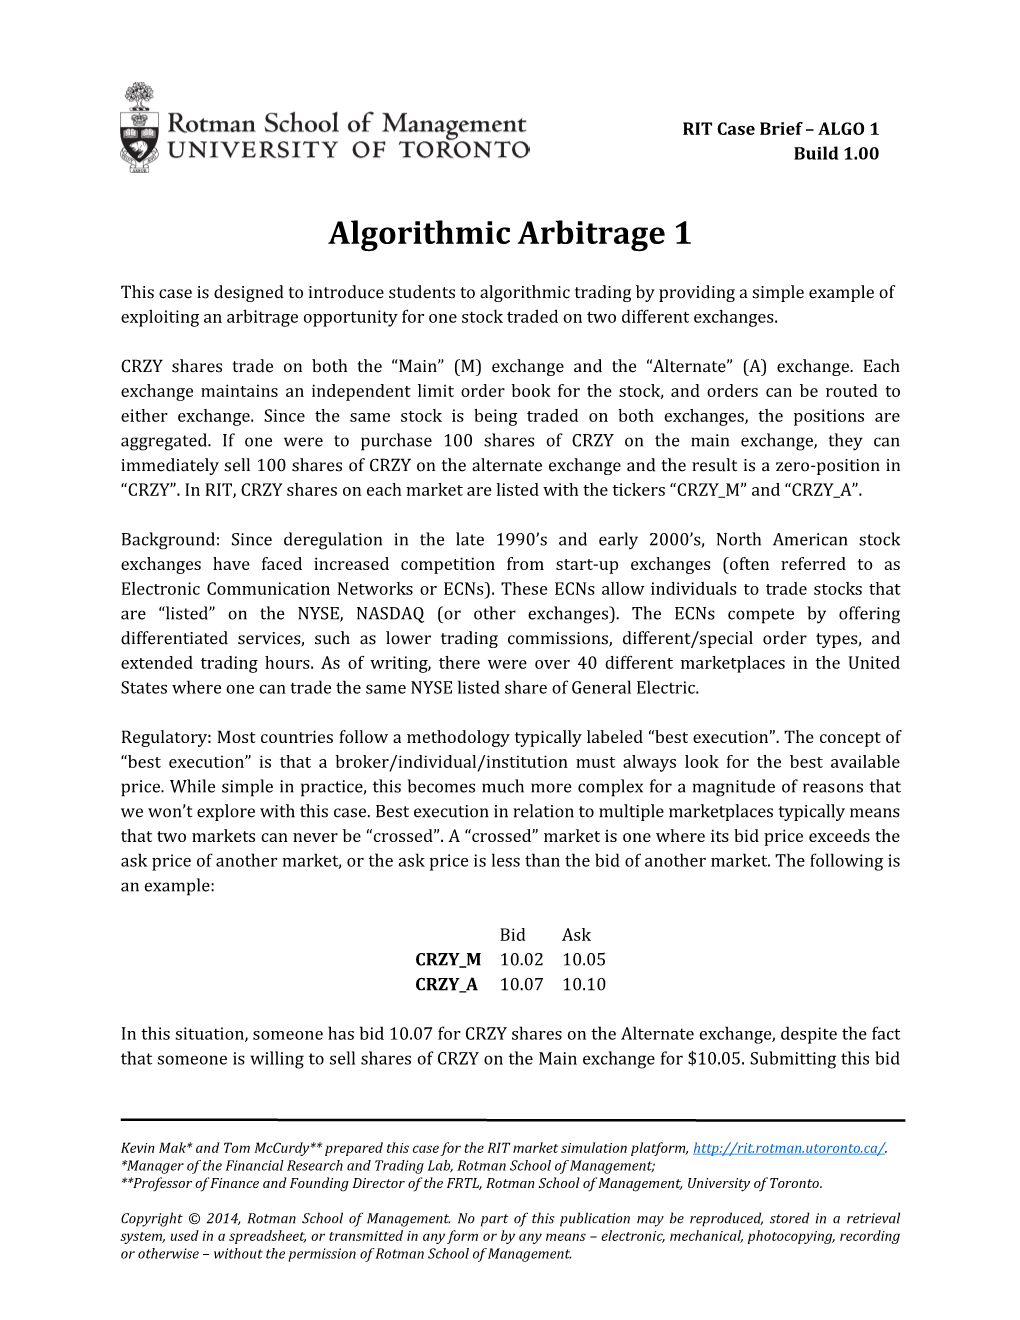 Algorithmic Arbitrage 1